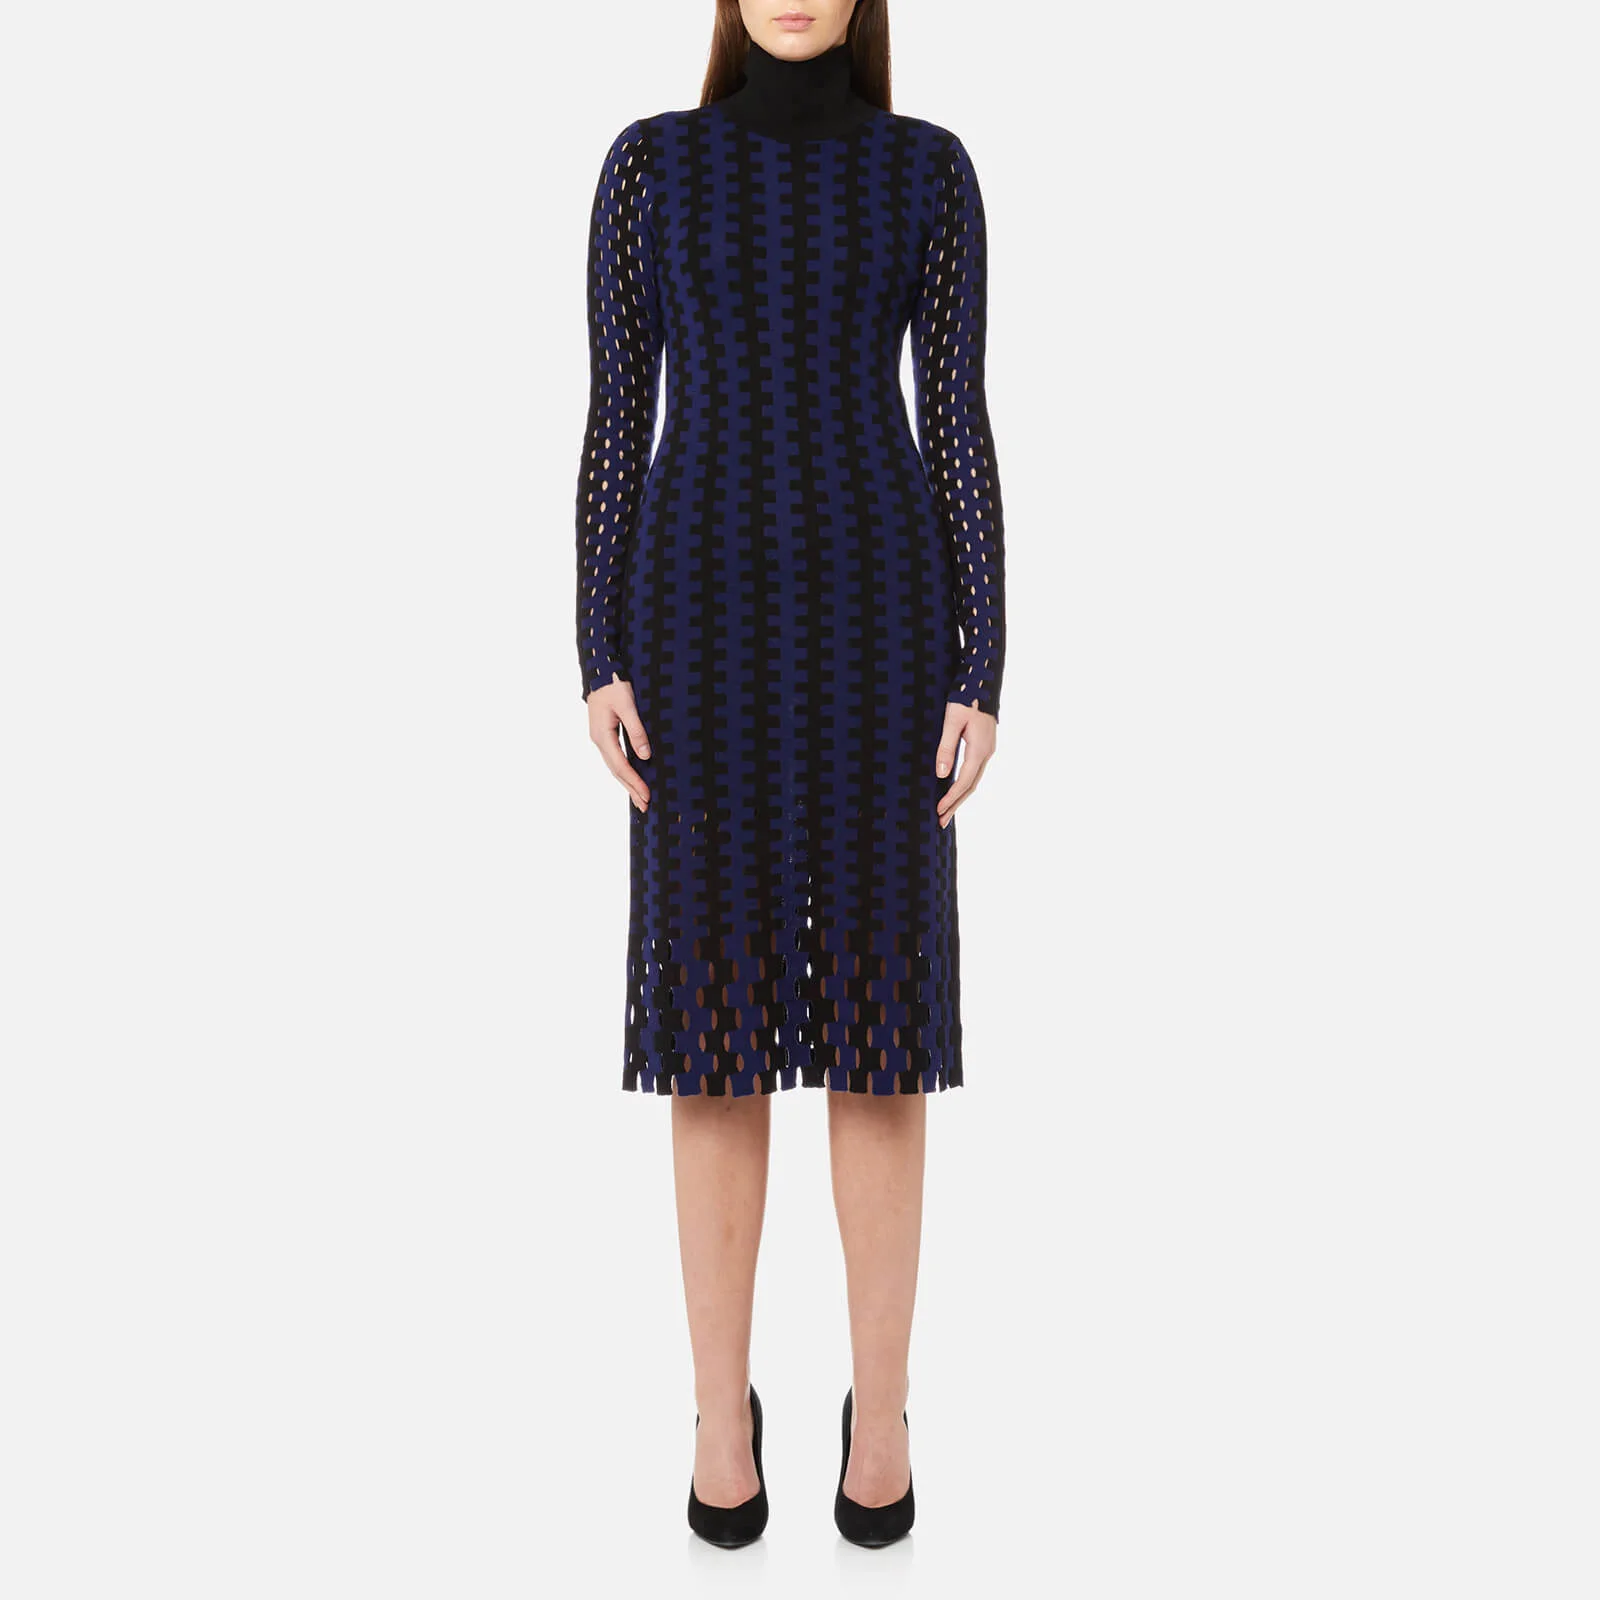 Diane von Furstenberg Women's Long Sleeve Turtleneck Knit Midi Dress - Black/Deep Violet Image 1